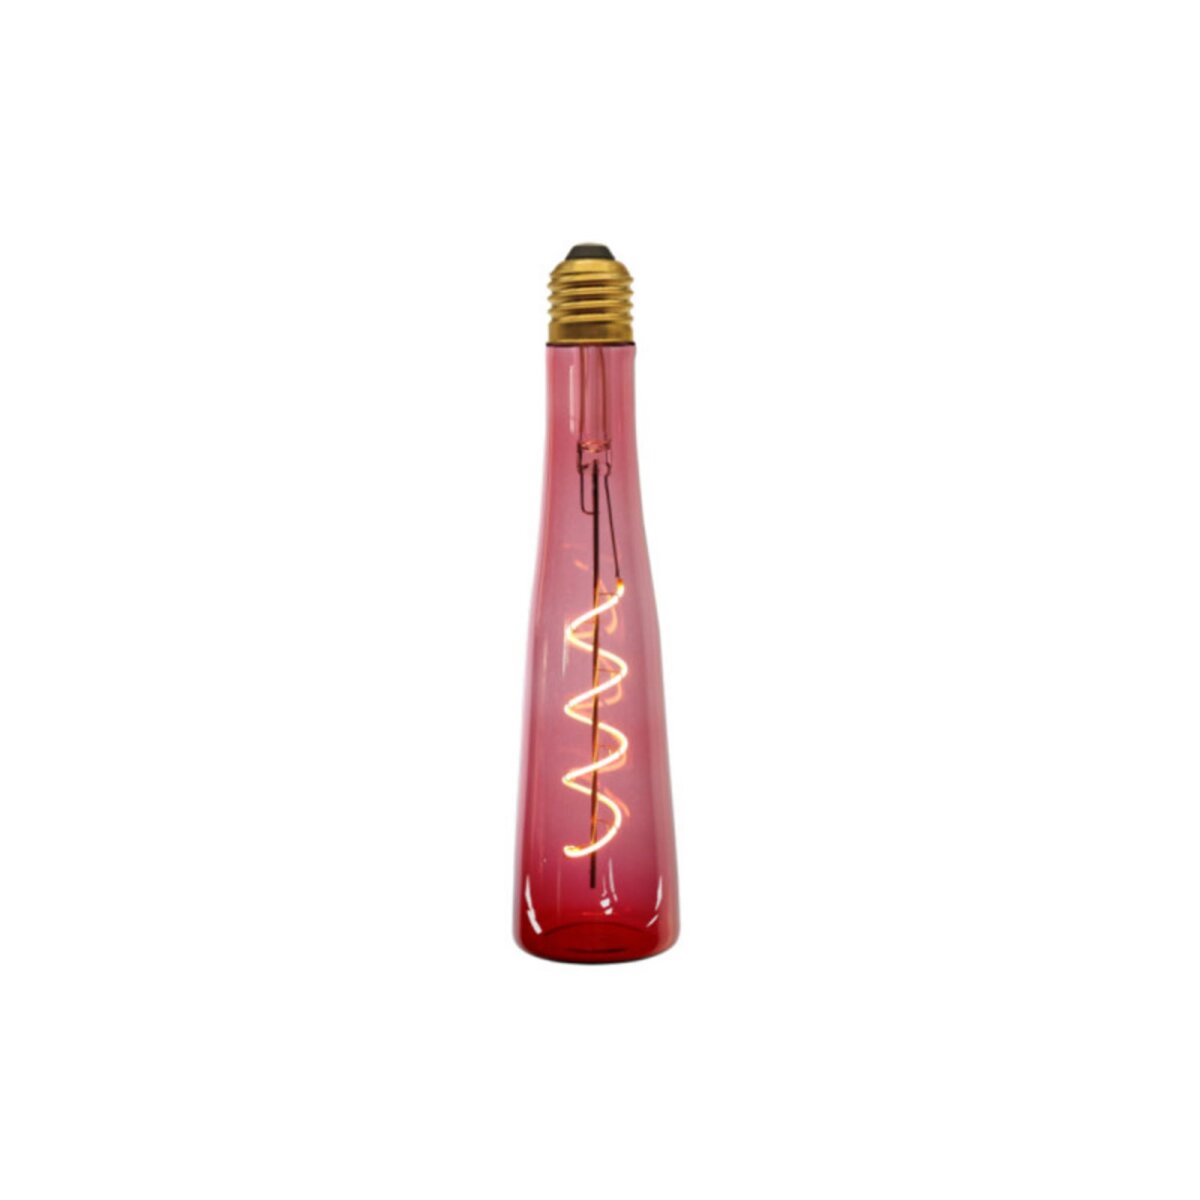  Ampoule LED bouteille rouge XXCELL - 4 W - 200 lumens - 3000 K - E27